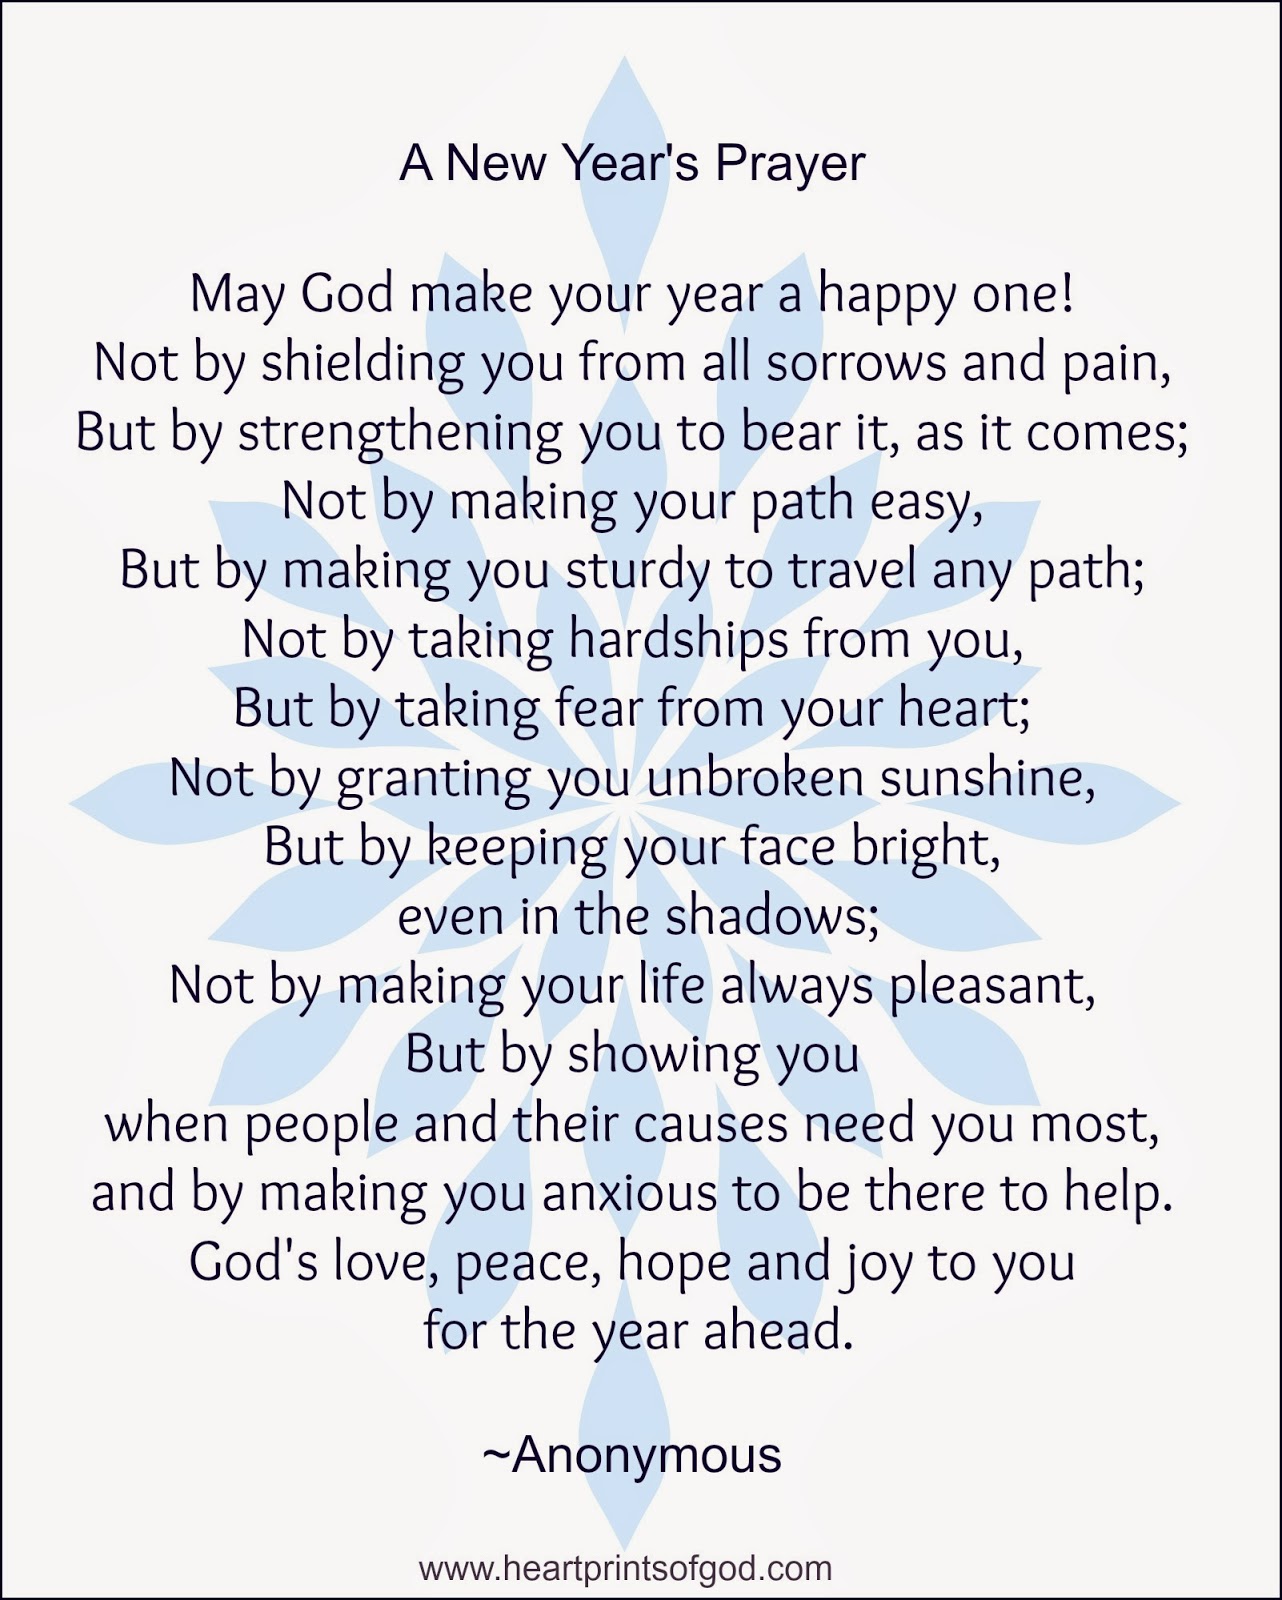 prayer-for-new-year-s-day-churchgists-com